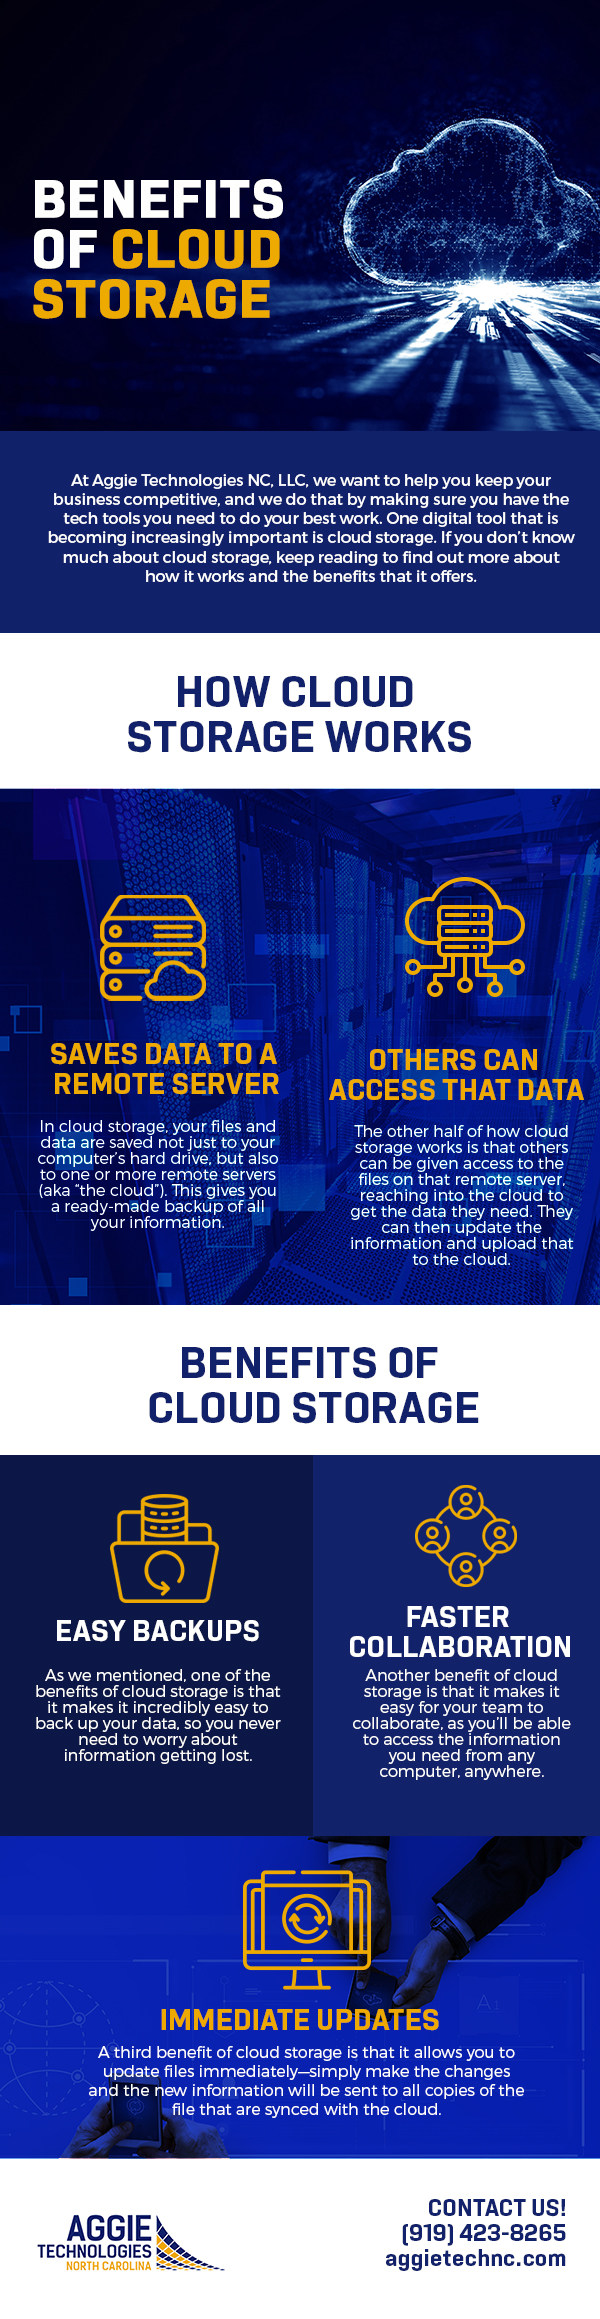 Benefits of Cloud Storage [infographic]